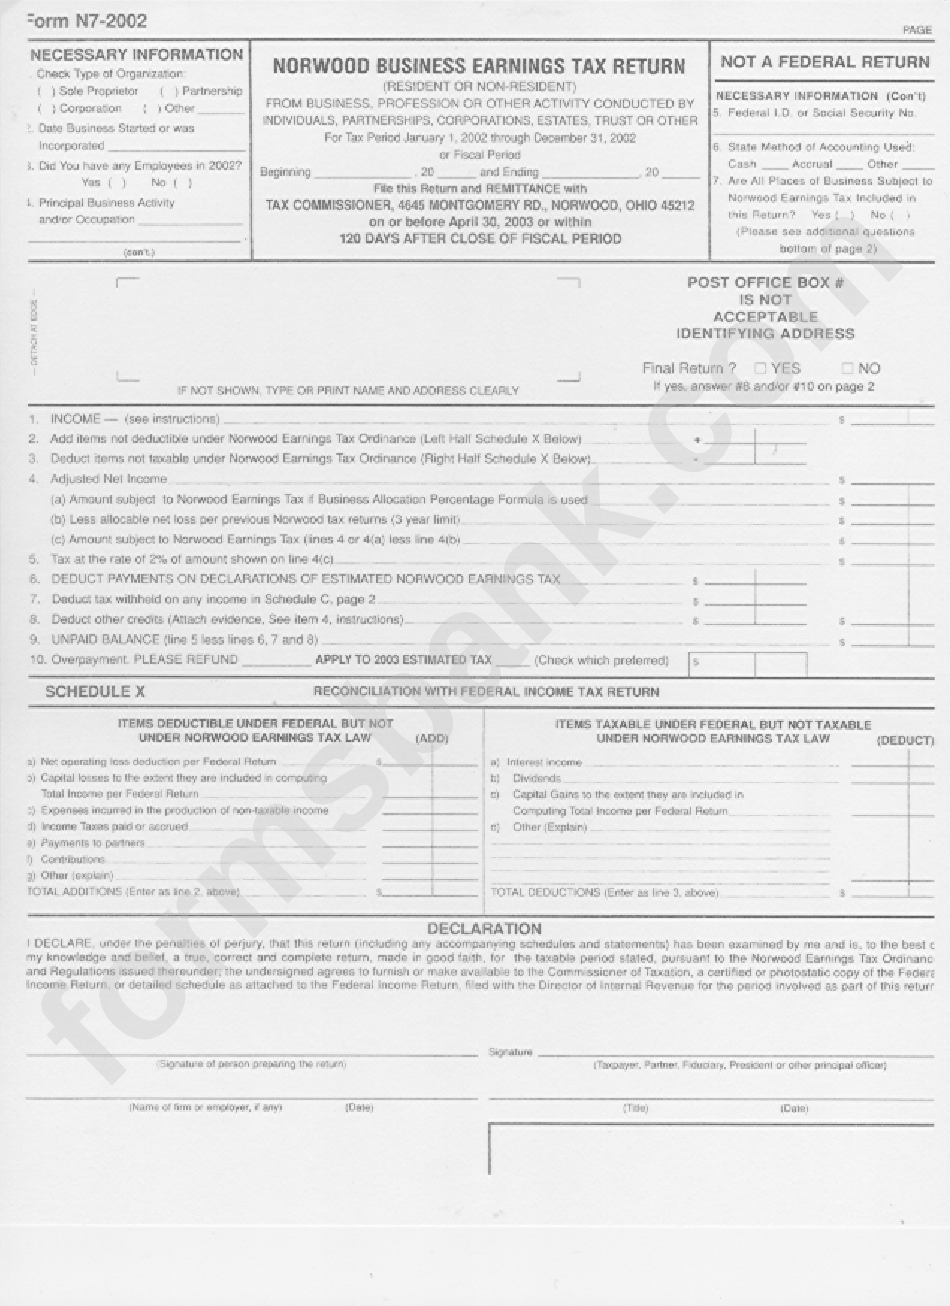 Form N7-2002 - Norwood Business Earnings Tax Return